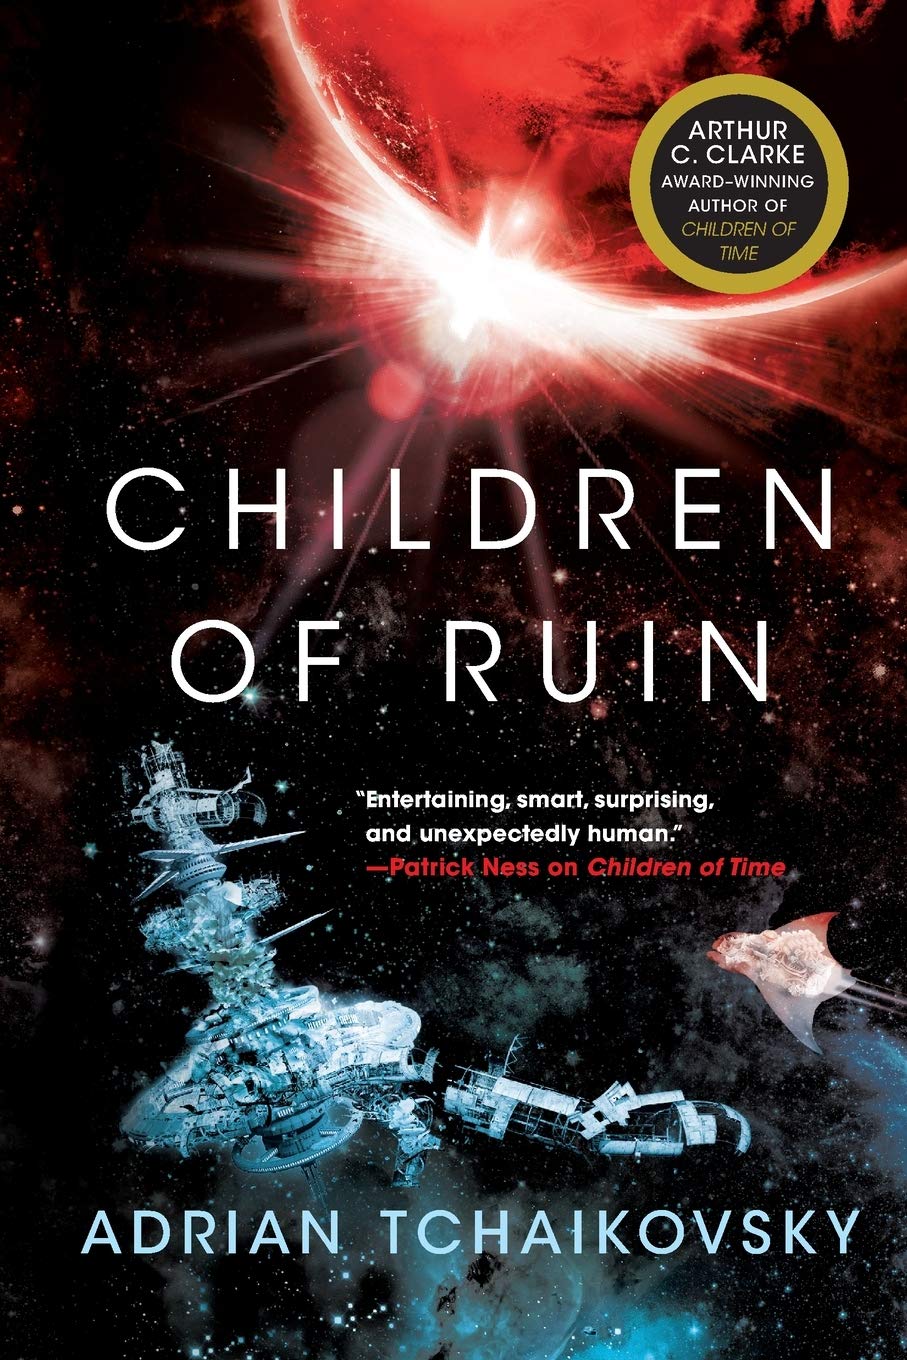 Children of Time #2 : Children of Ruin by Adrian Tchaikovsky